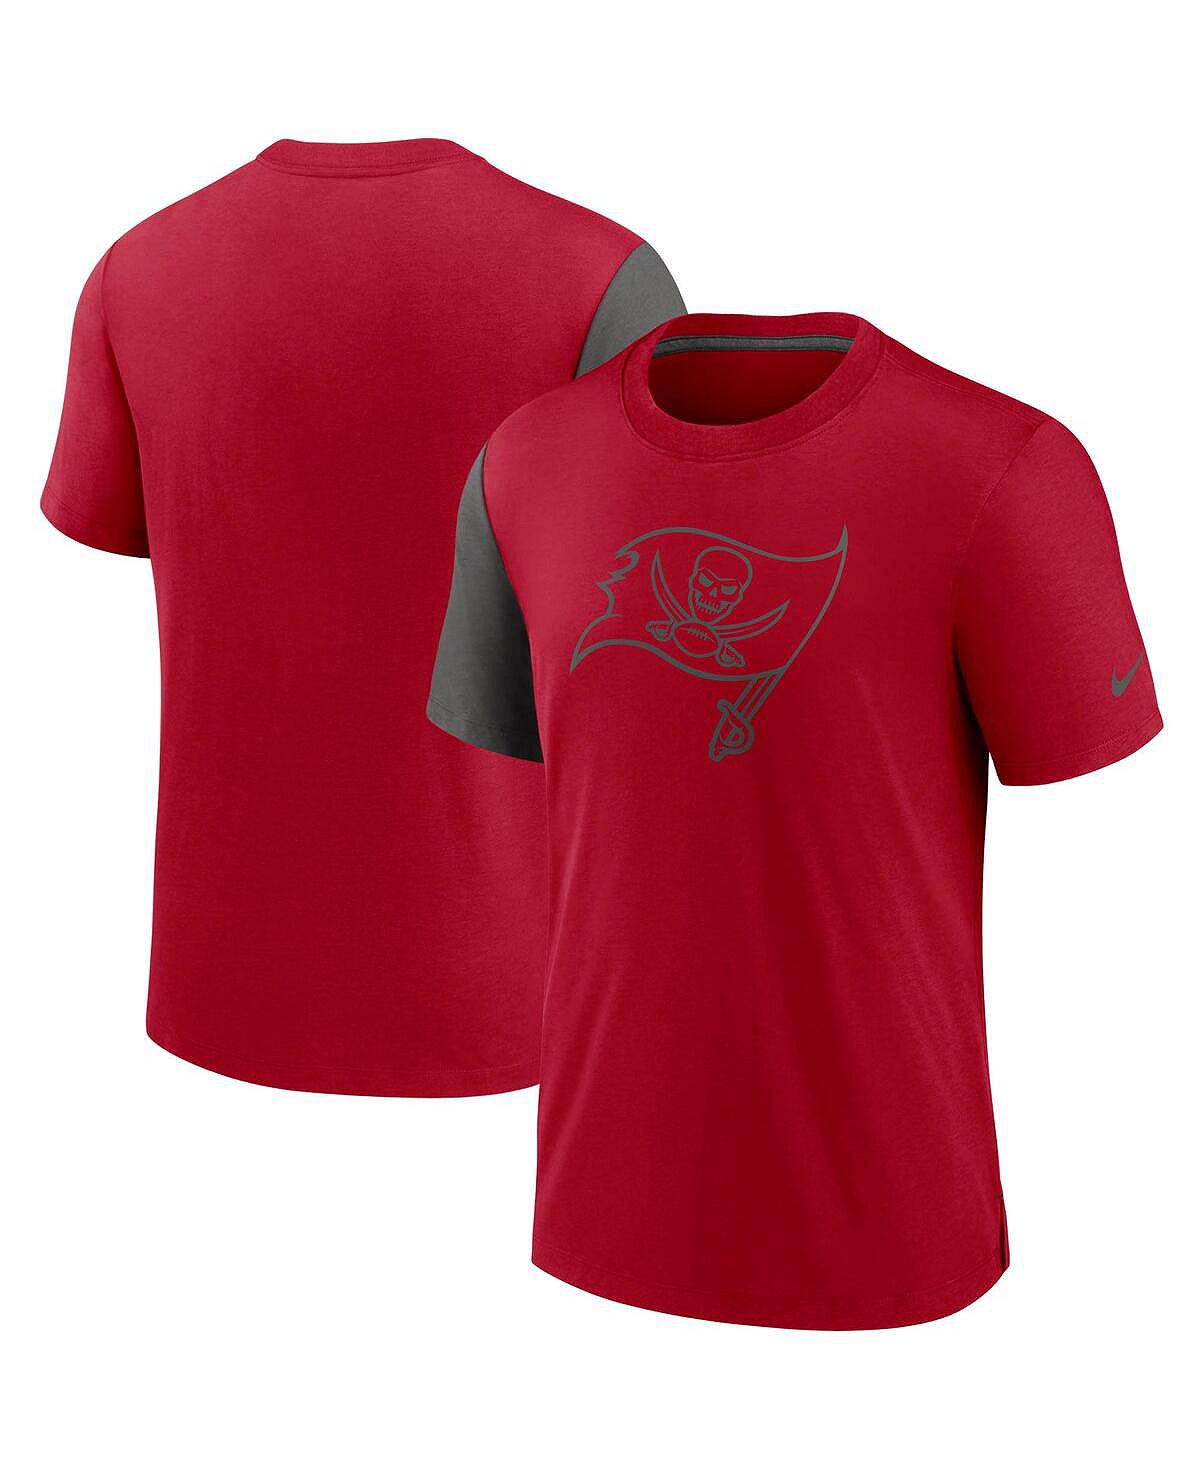 Мужская красная, оловянная футболка tampa bay buccaneers pop performance Nike, мульти